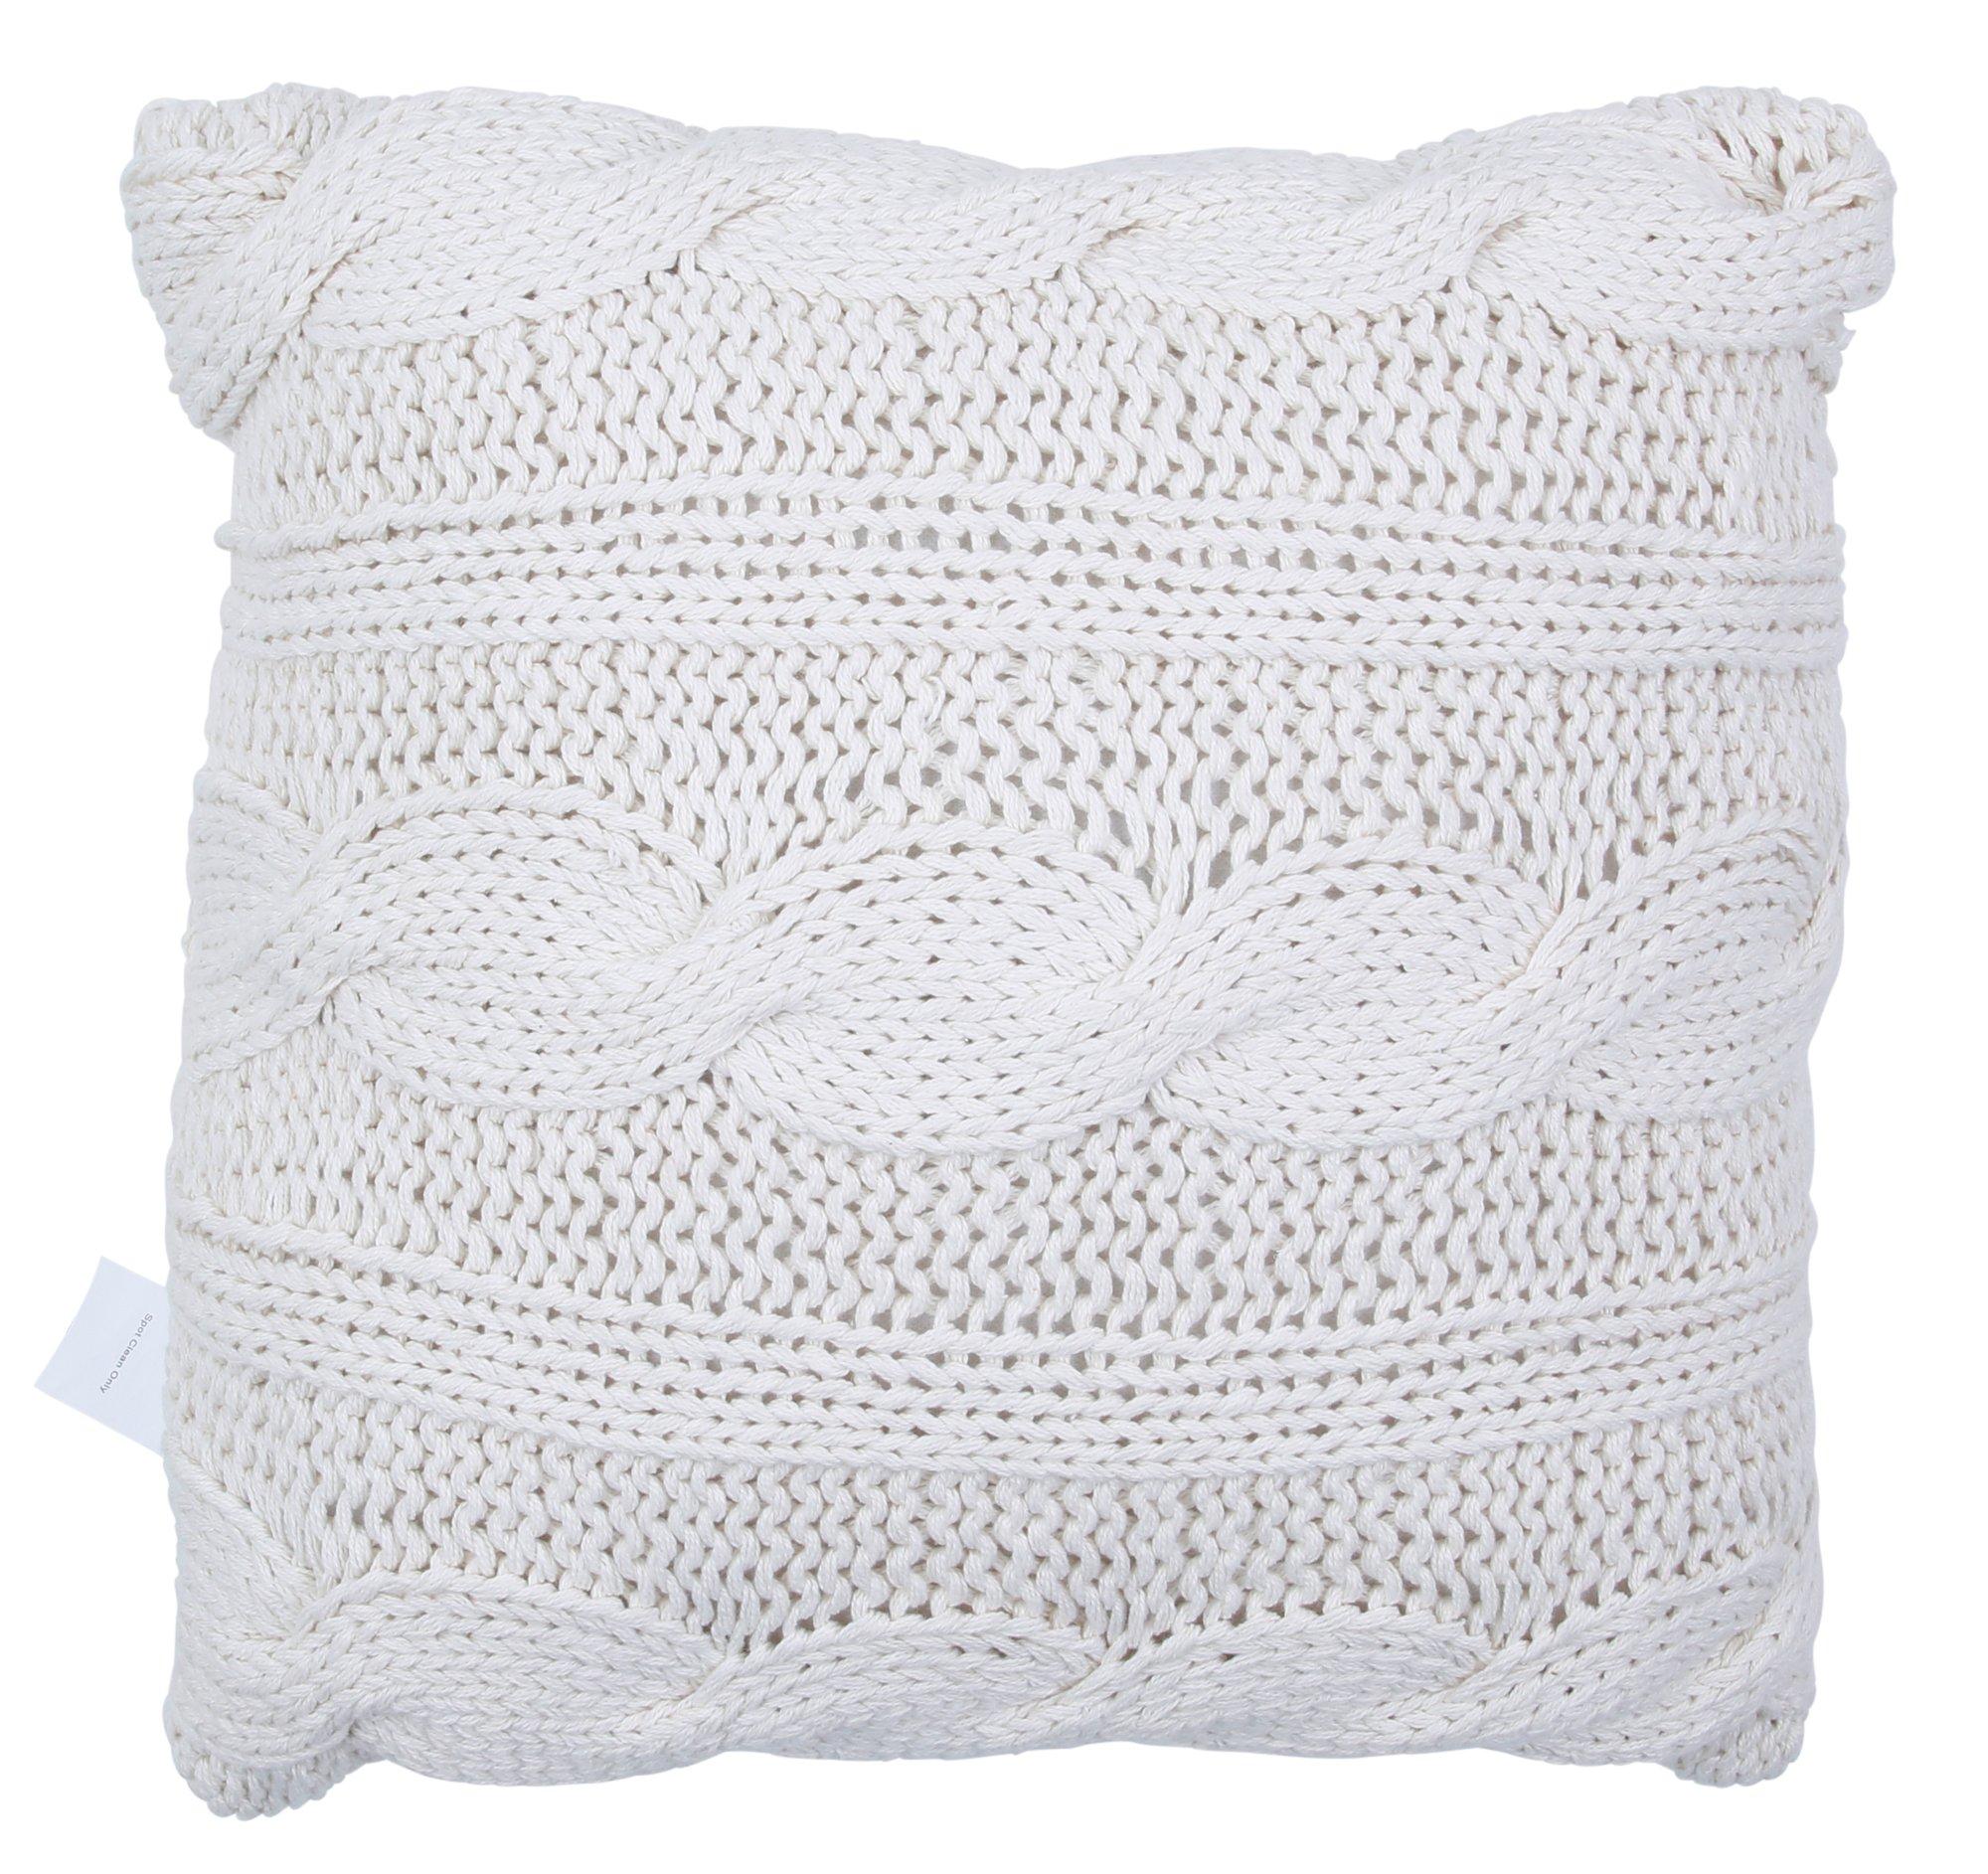 18x18 Christmas Crochet Front Throw Pillow - White